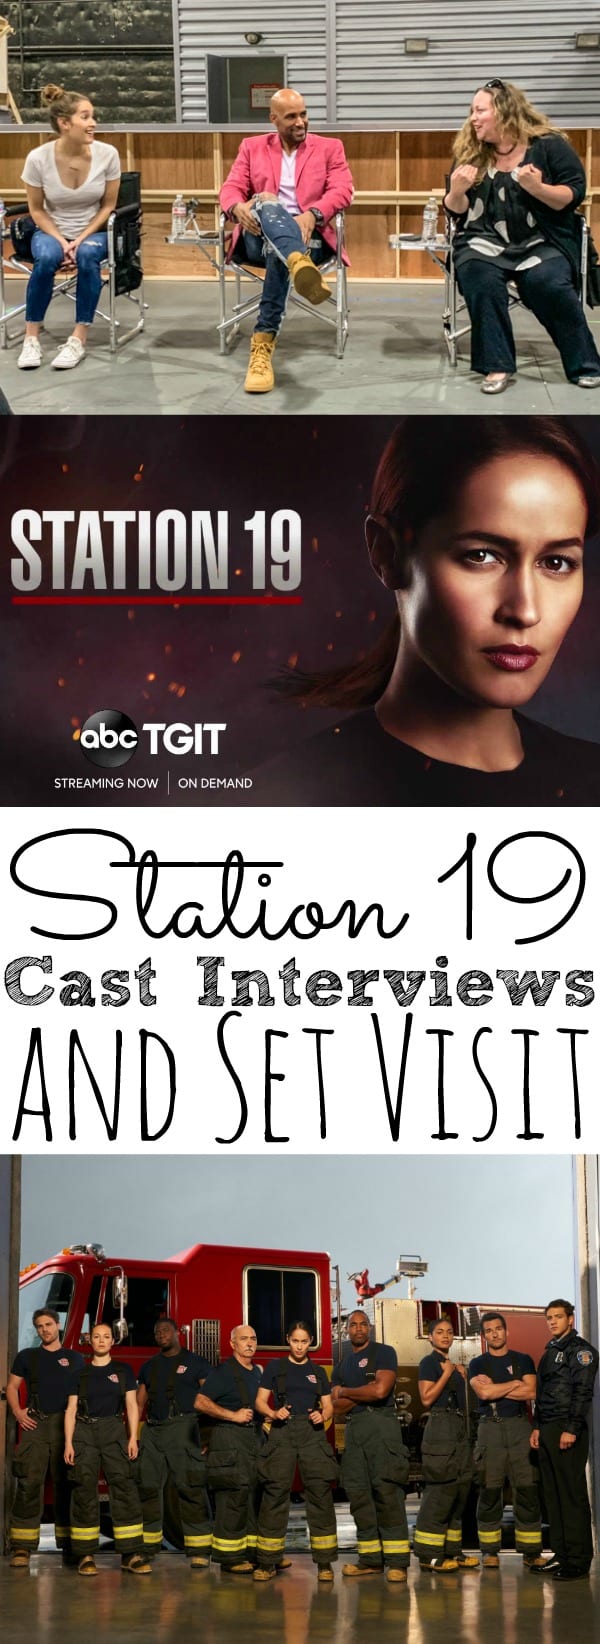 Station 19 Set Visit and Cast Interviews